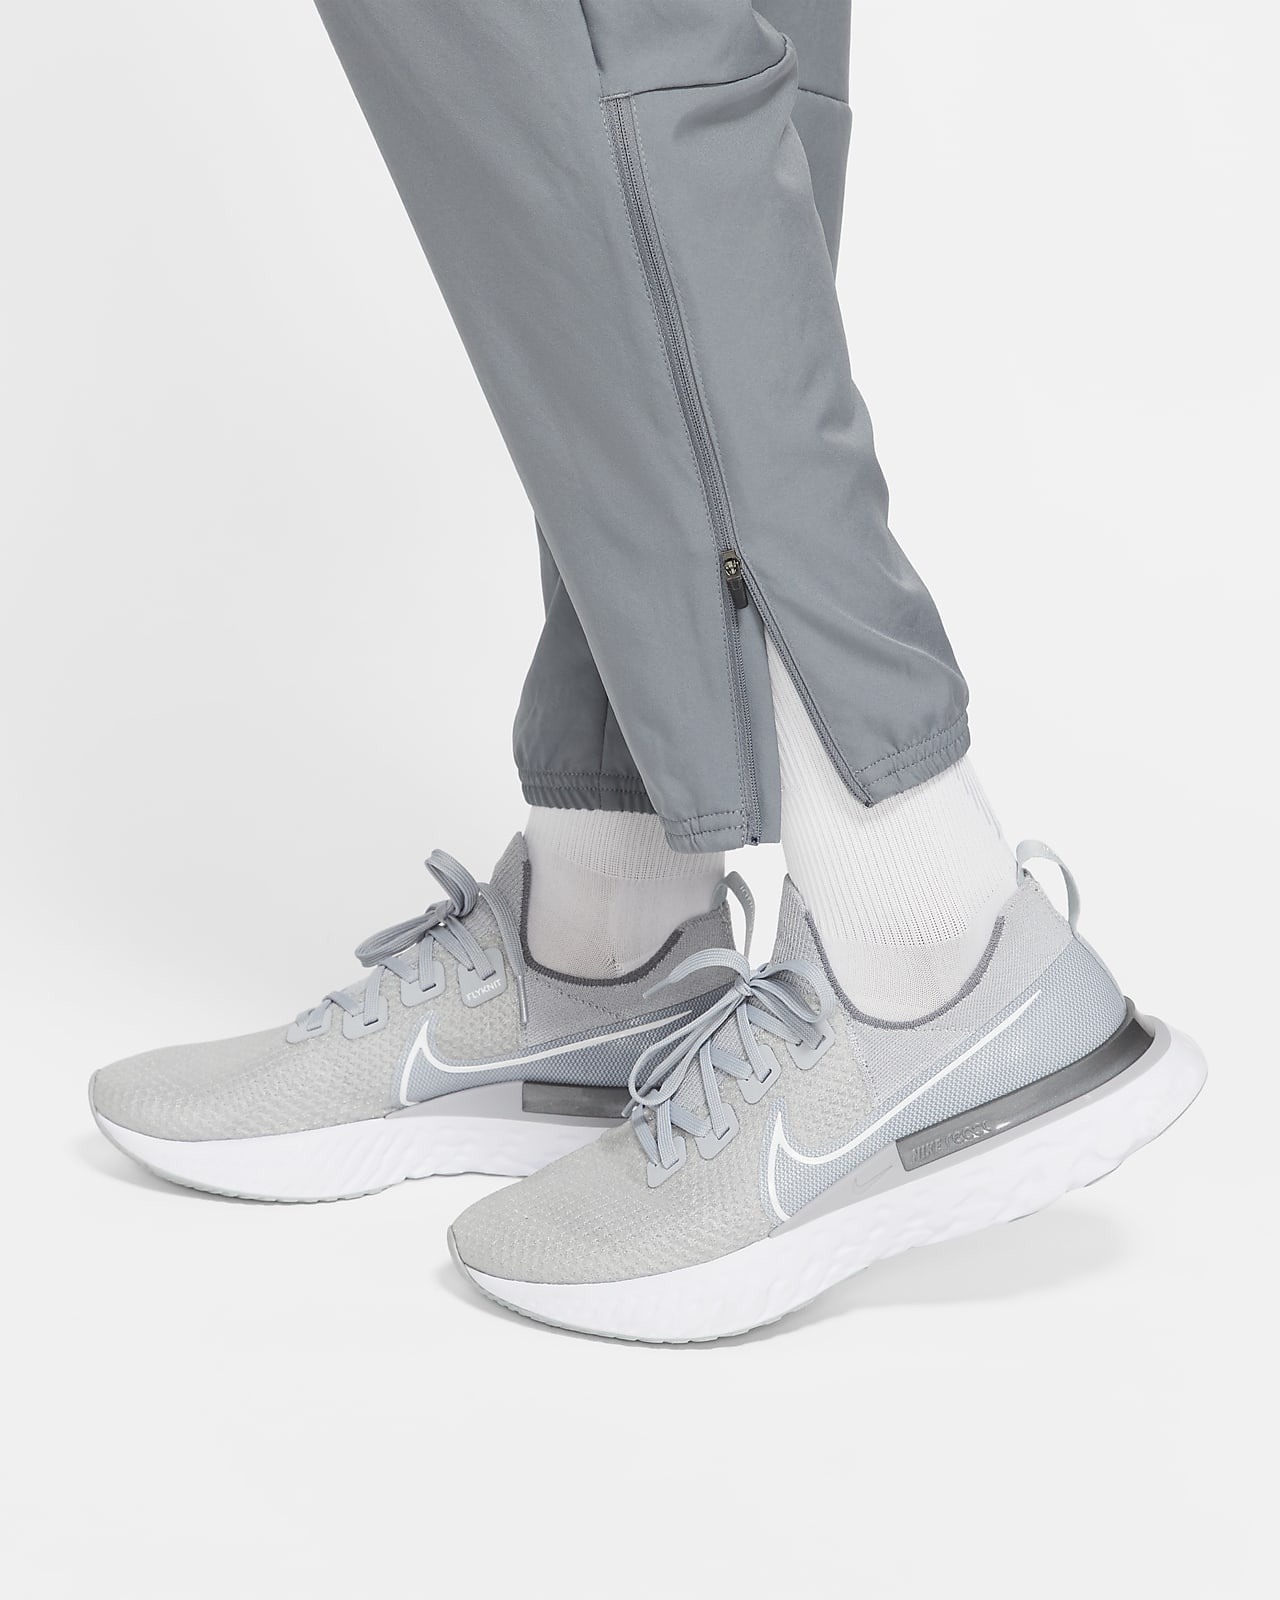 Nike Men's Dri-Fit Challenger Knit Running Pants